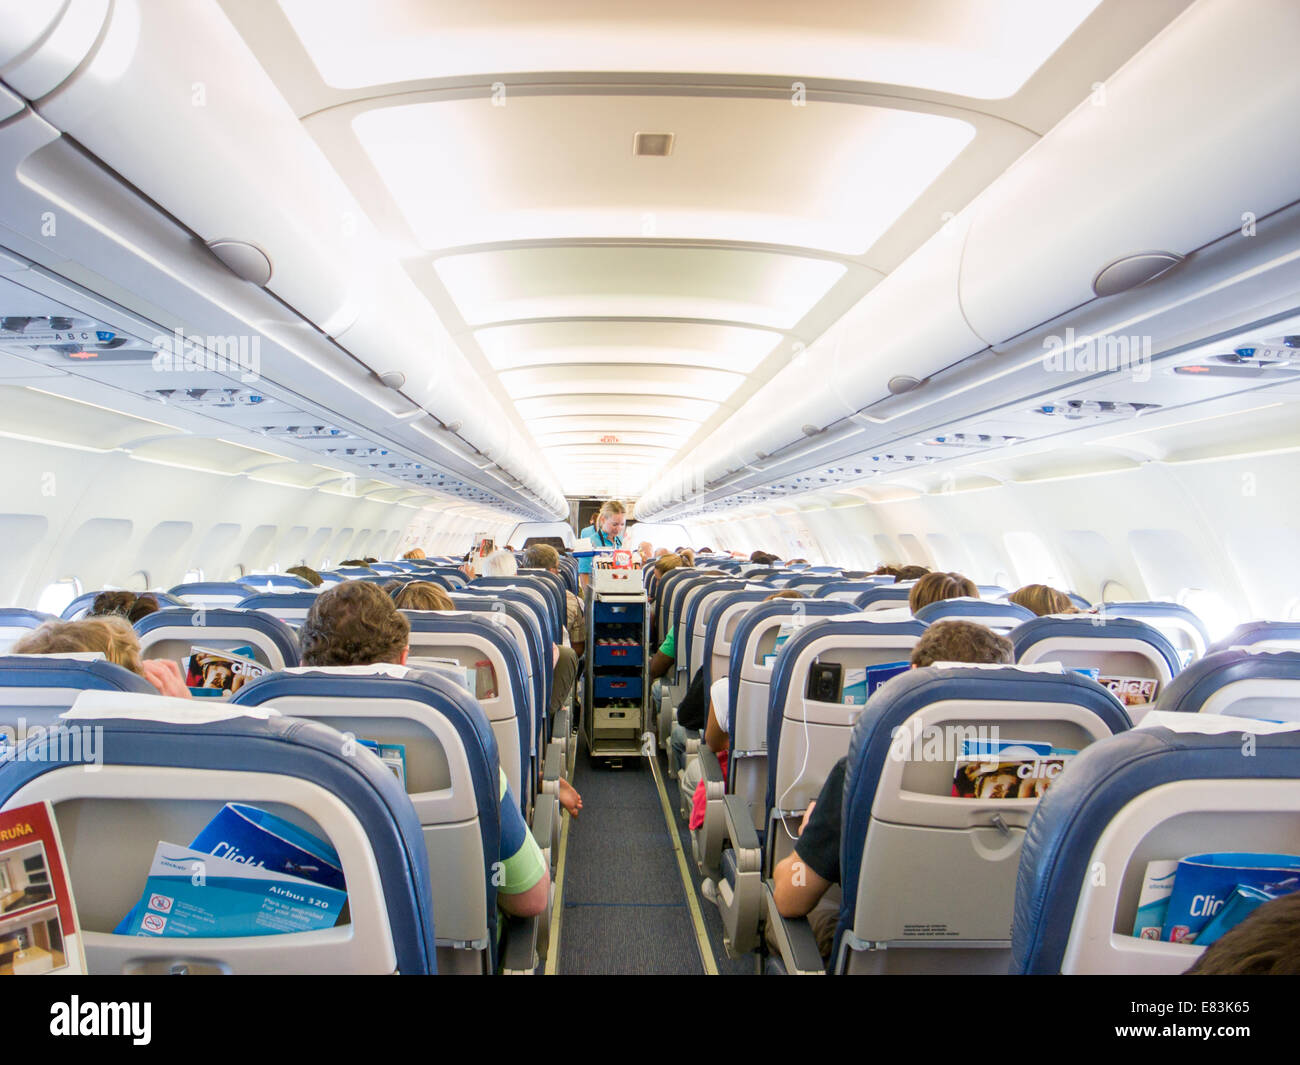 Inside Airbus passenger aeroplane Stock Photo